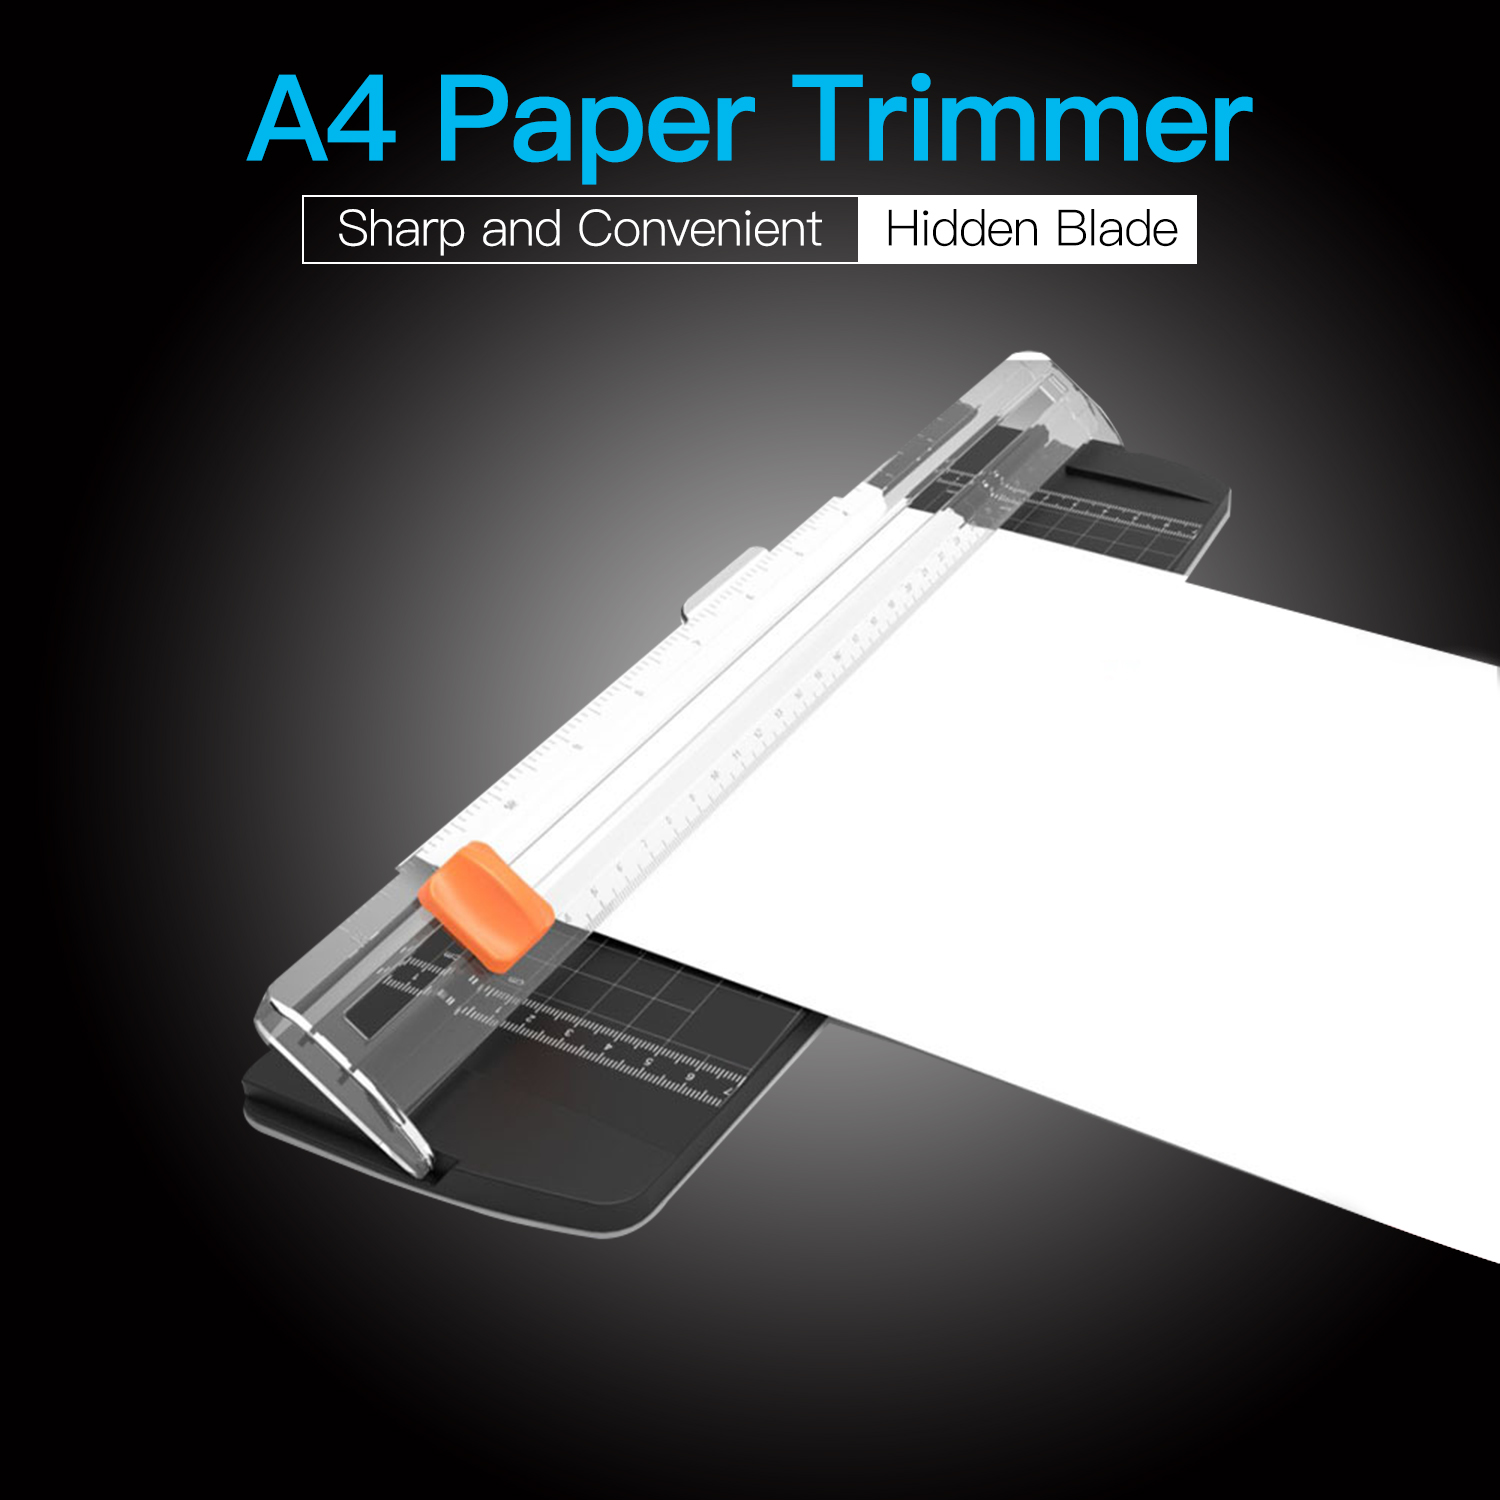 Aibecy Portable Paper Trimmer A4 Size Paper Cutter Cutting Machine 12 Inch Cutting Width for Craft Paper Photo Laminated Paper